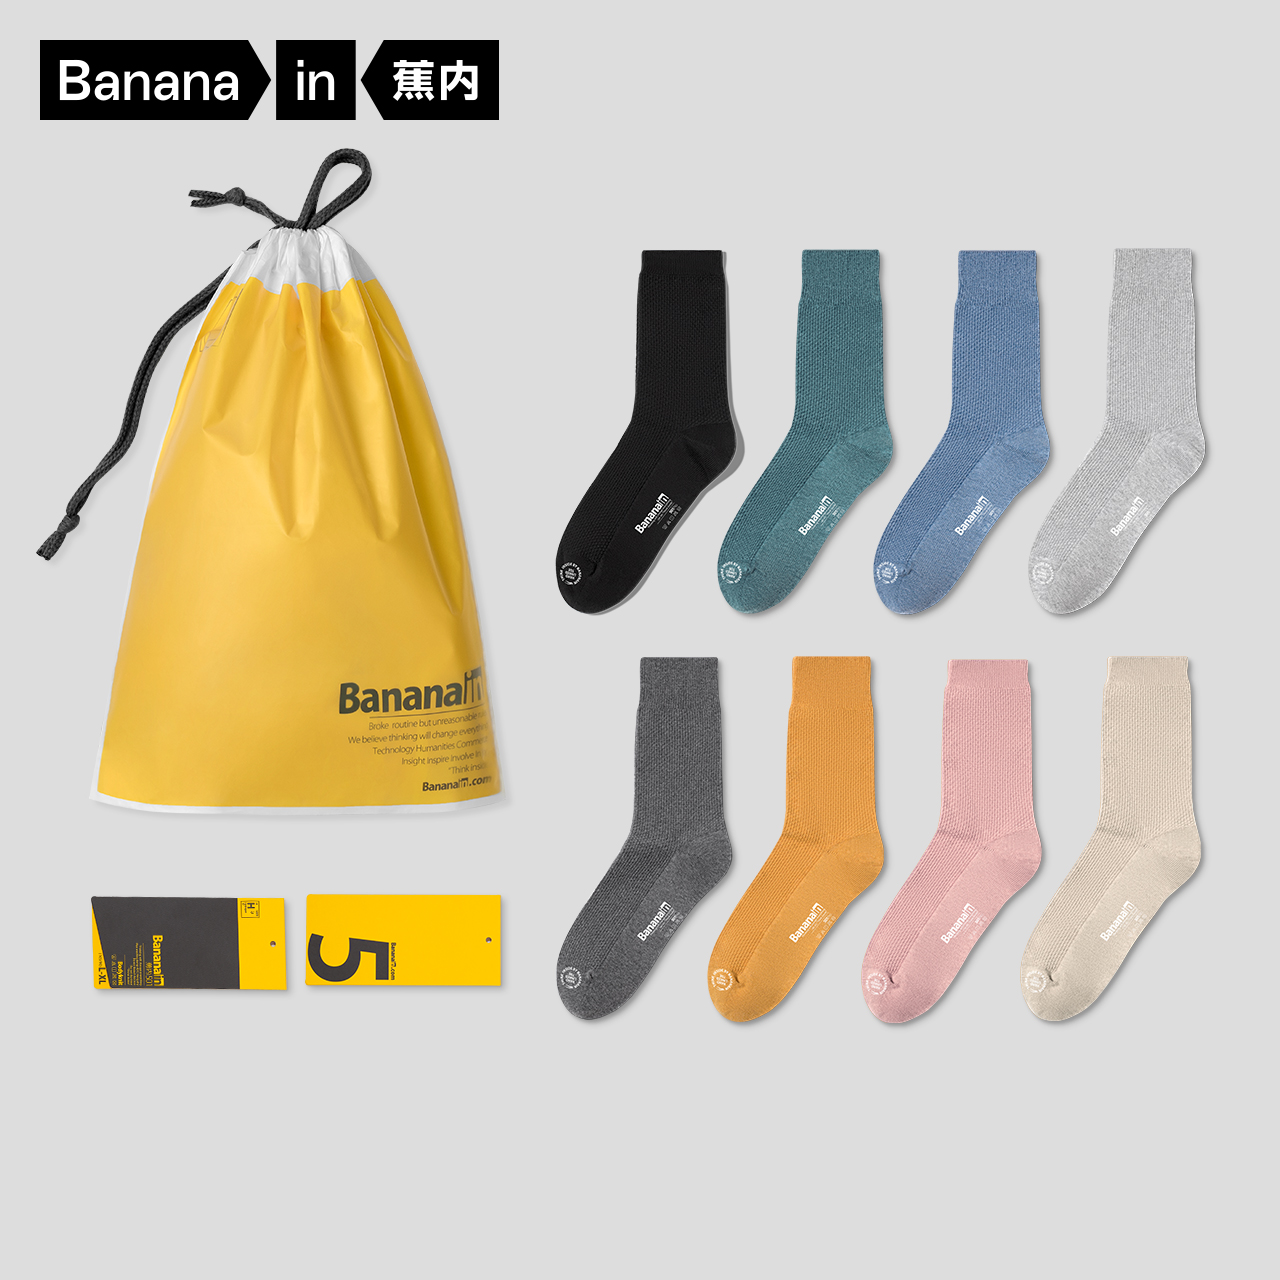 Banana inner lovers socks 501P ladies middle tube socks sport breathable ins trend socks men antibacterial anti-odor stockings